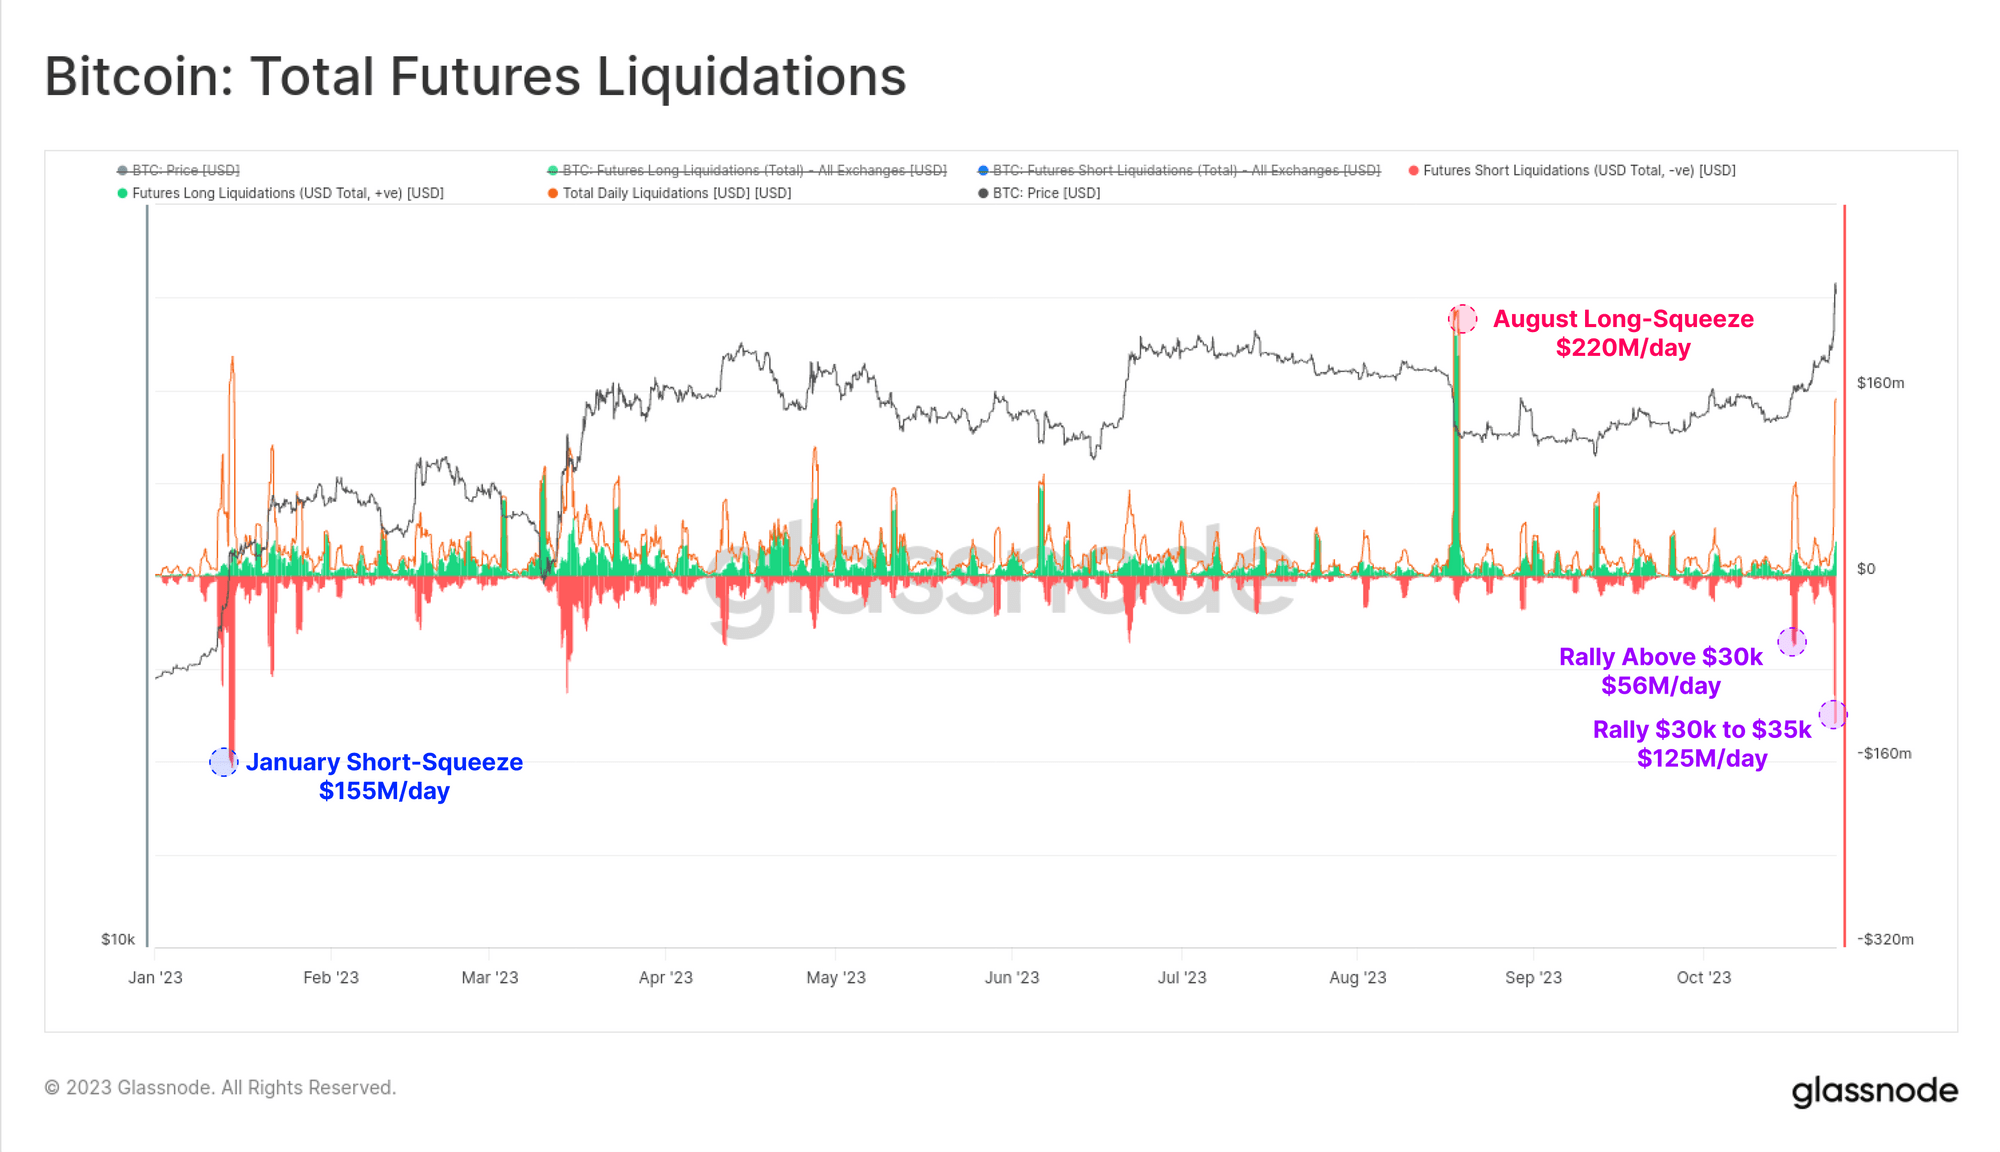 Bitcoin Futures Liquidations